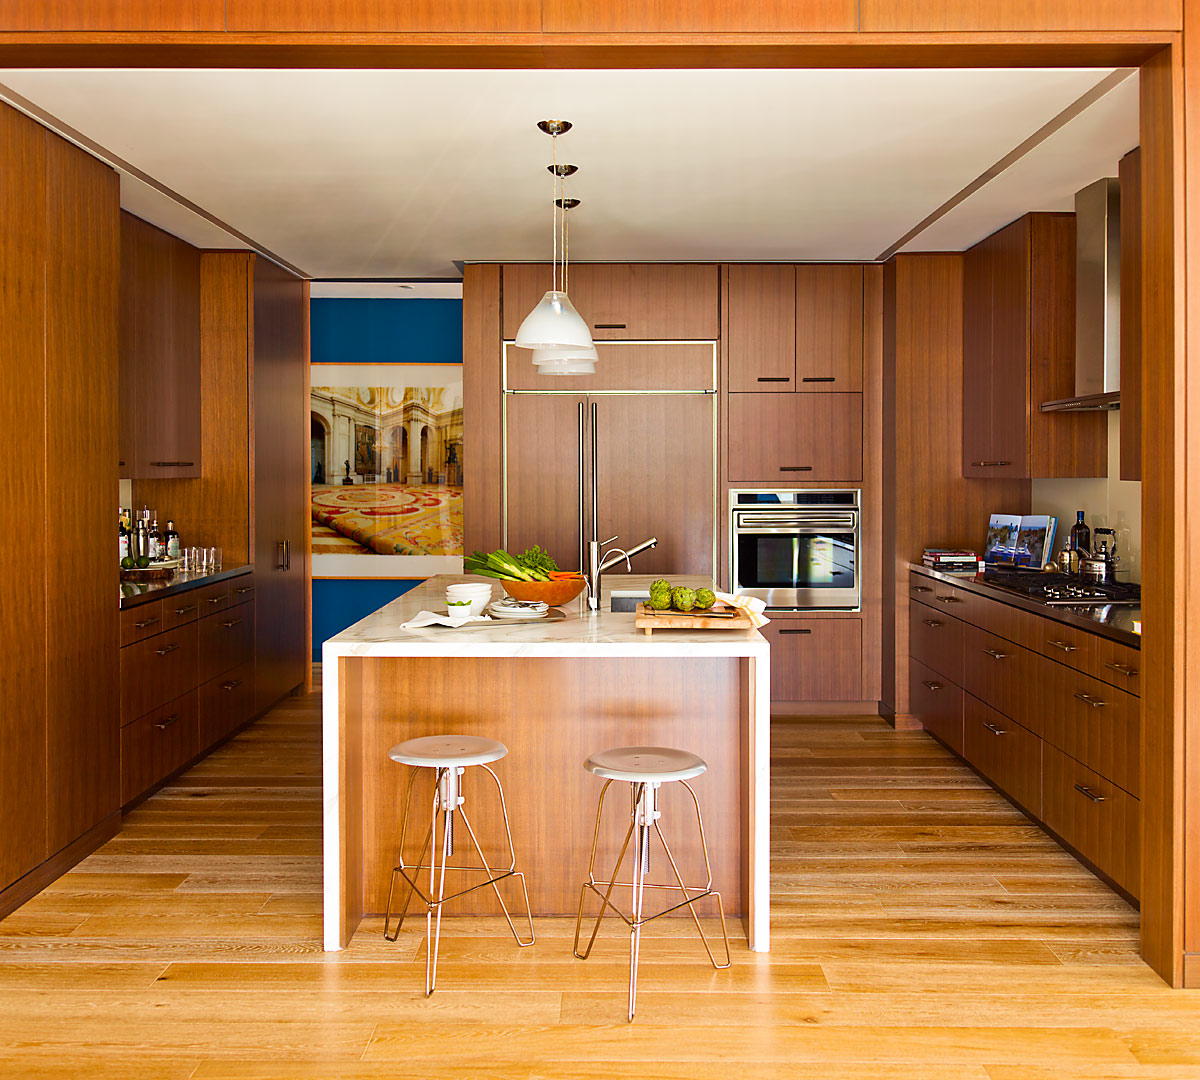 Millennium Tower San Francisco Residence Kitchen - interior design by BAMO